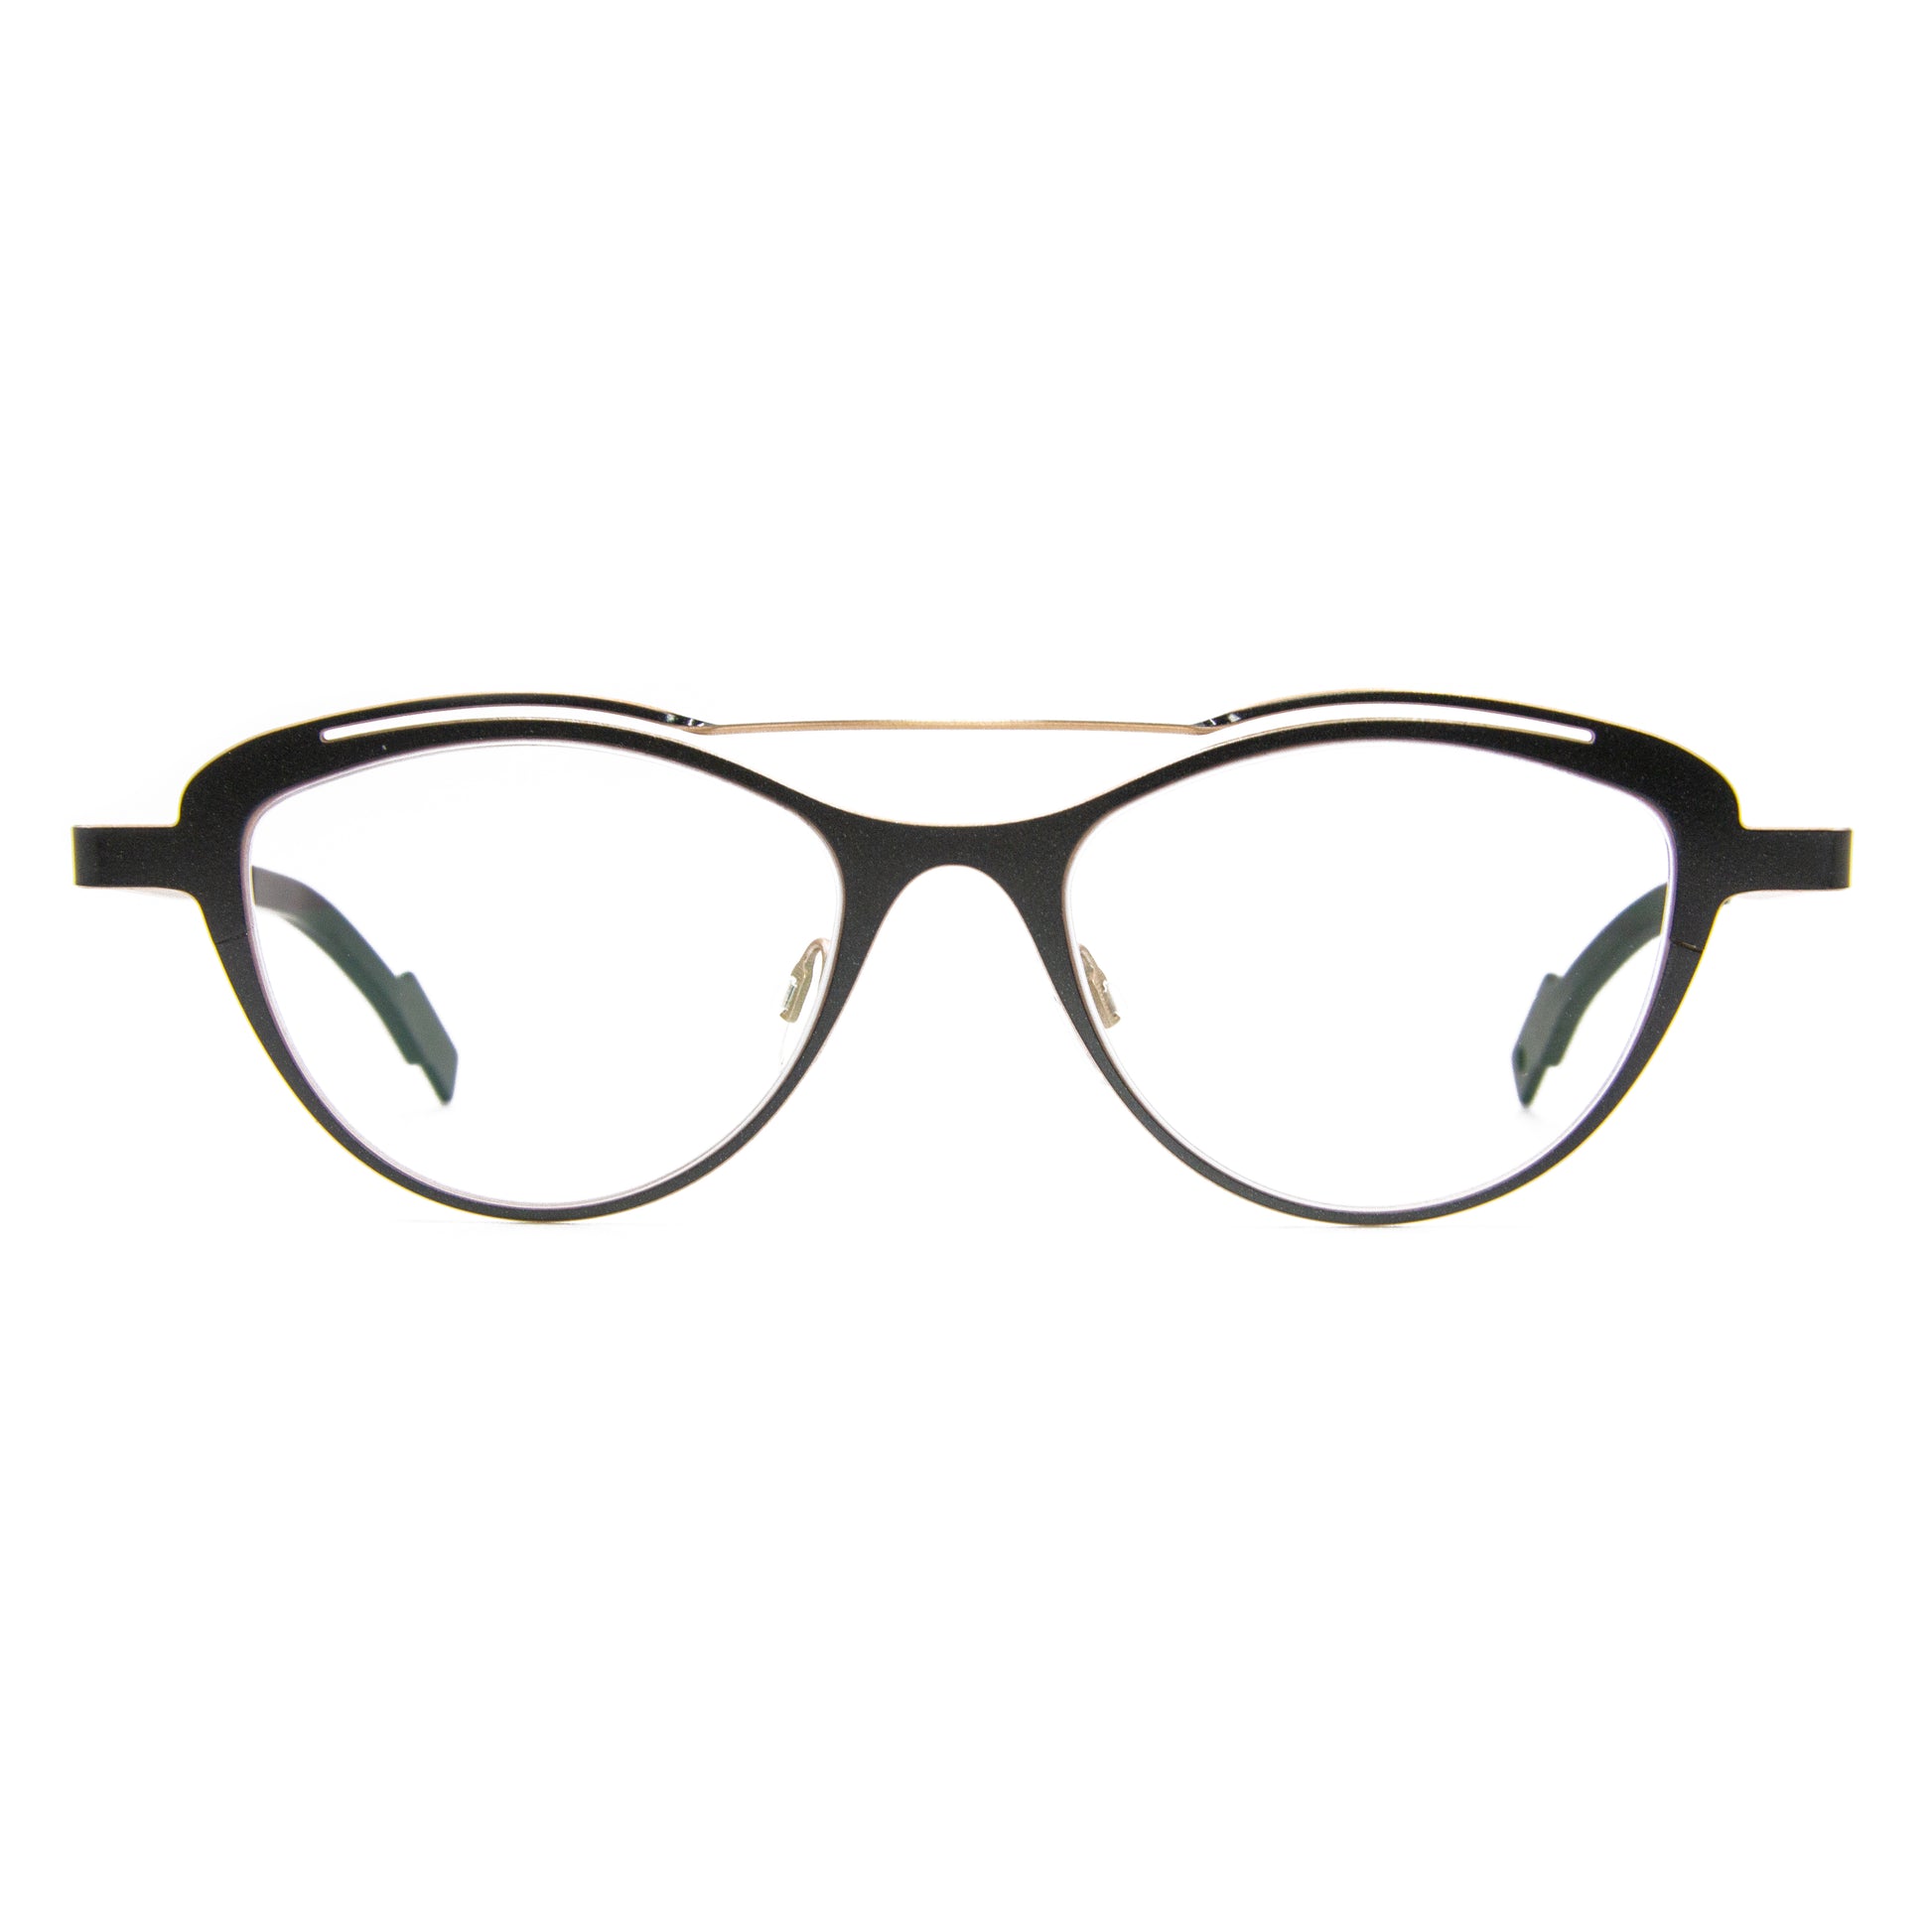 Theo - Eyewear - Carve - 463 - Glasses